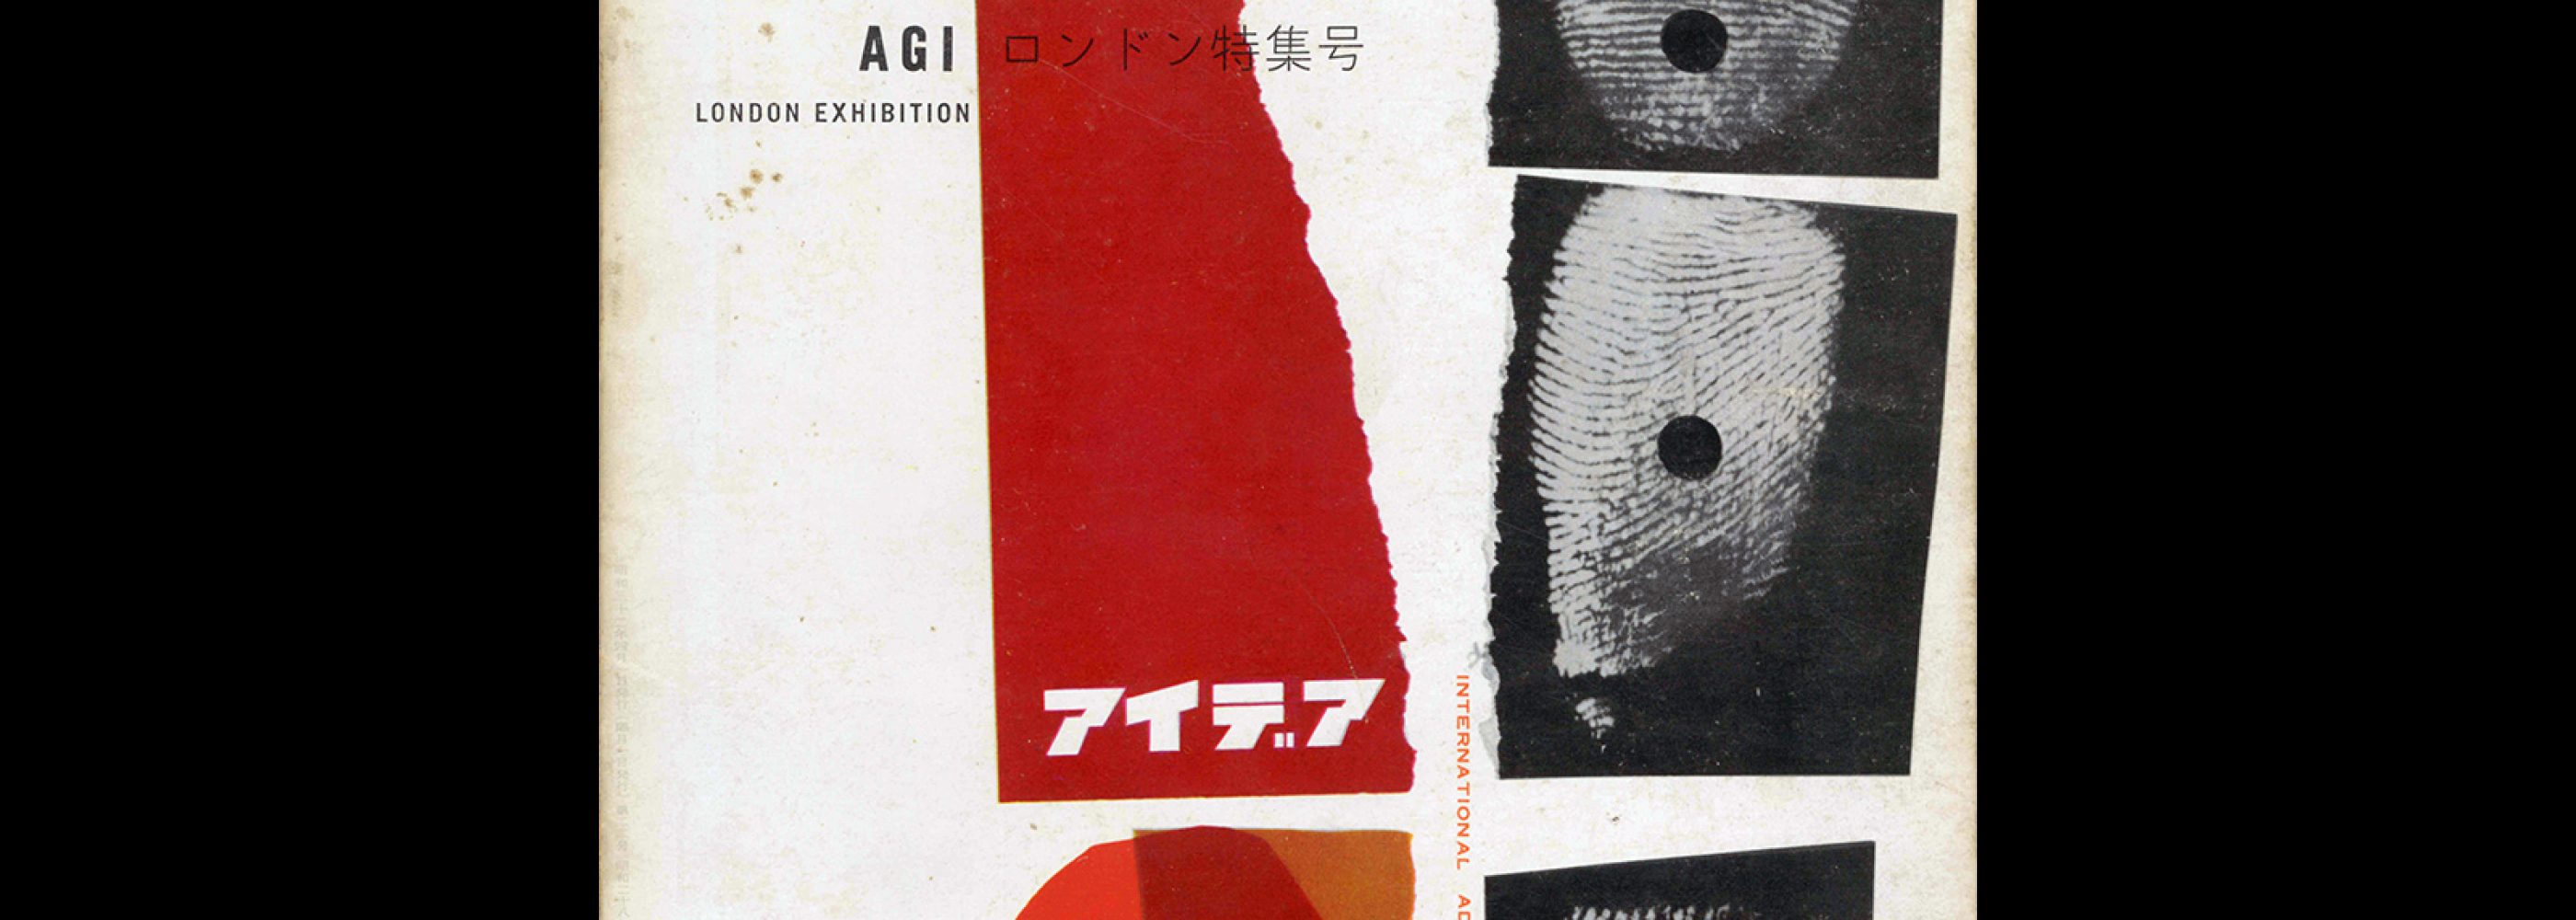 Idea 22, 1957. Cover design by Hans Schleger (zero).